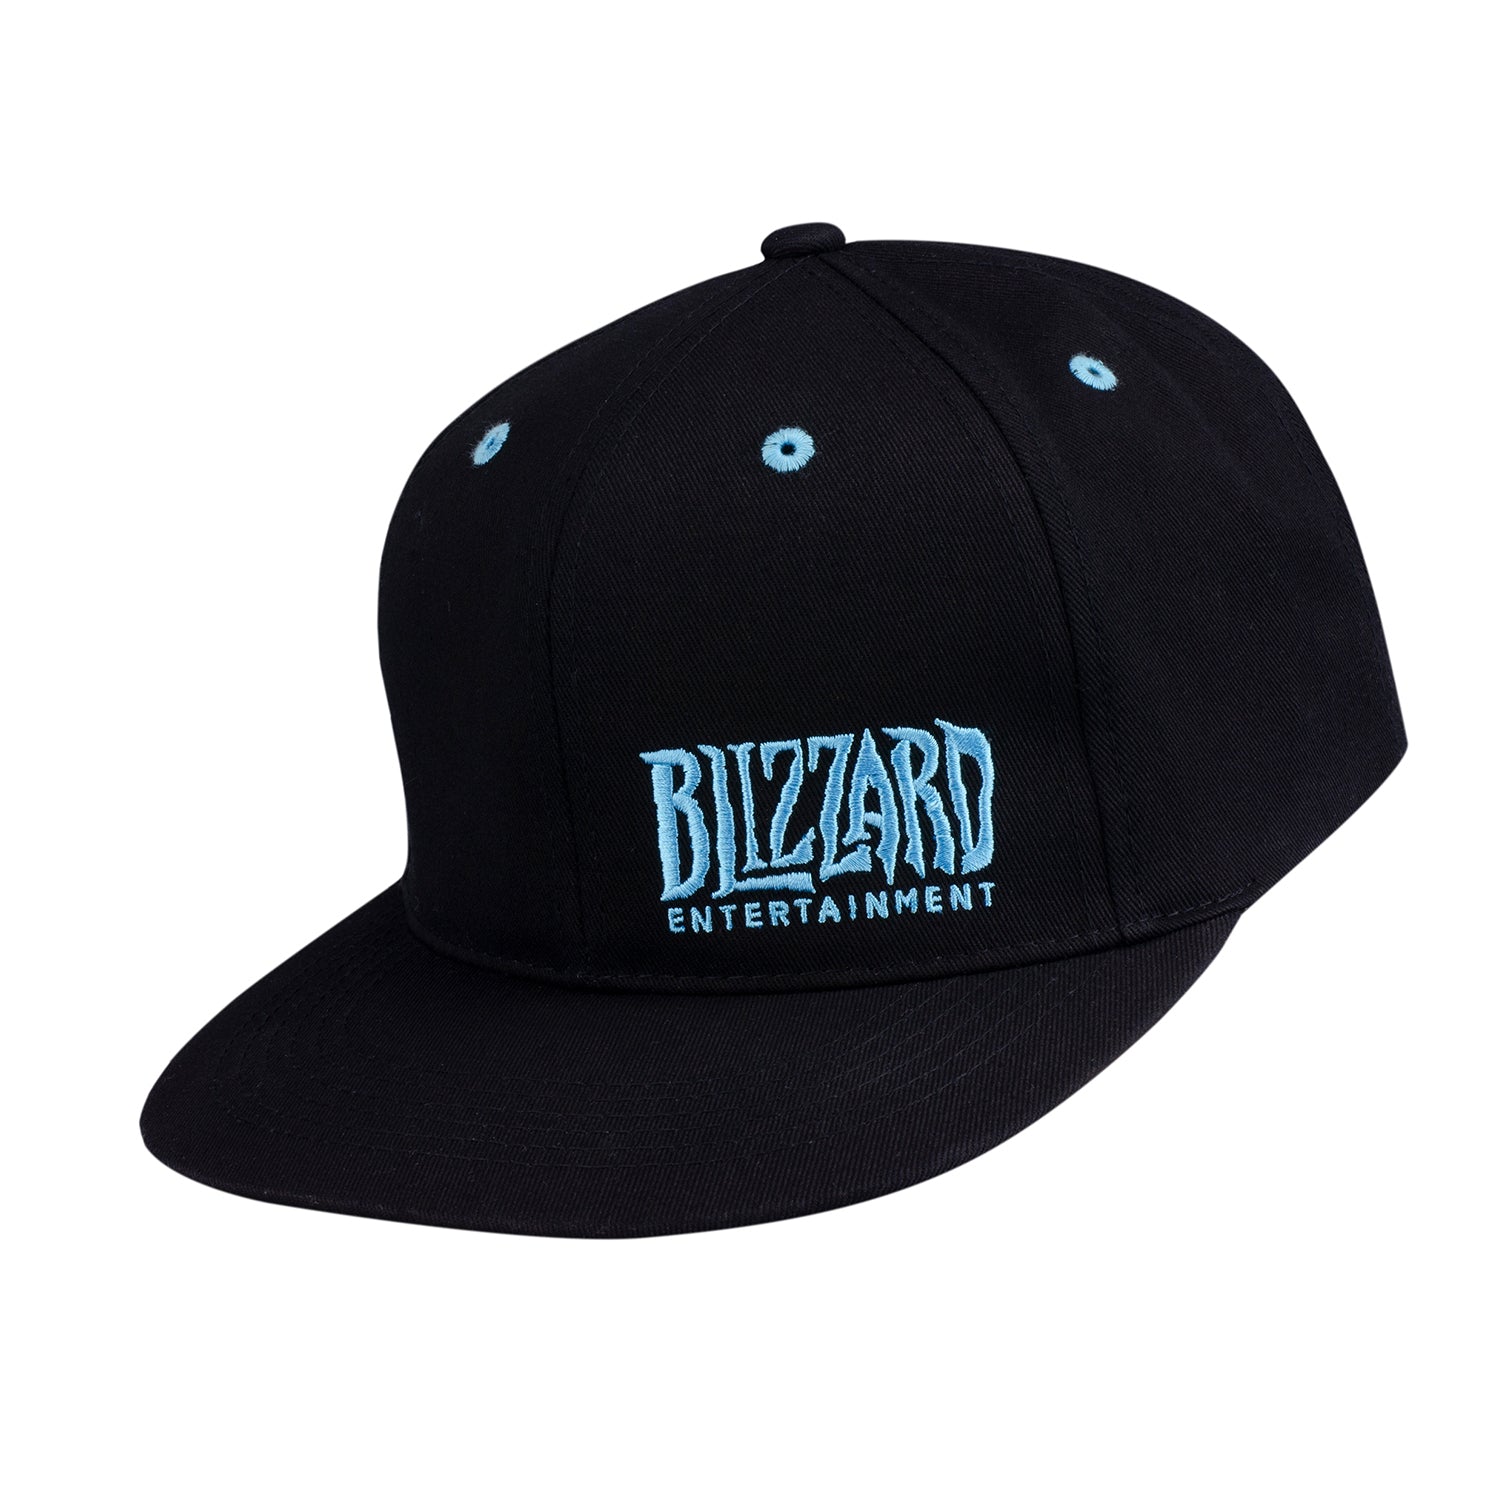 Blizzard Entertainment Black Flatbill Snapback Hat - Left Front View